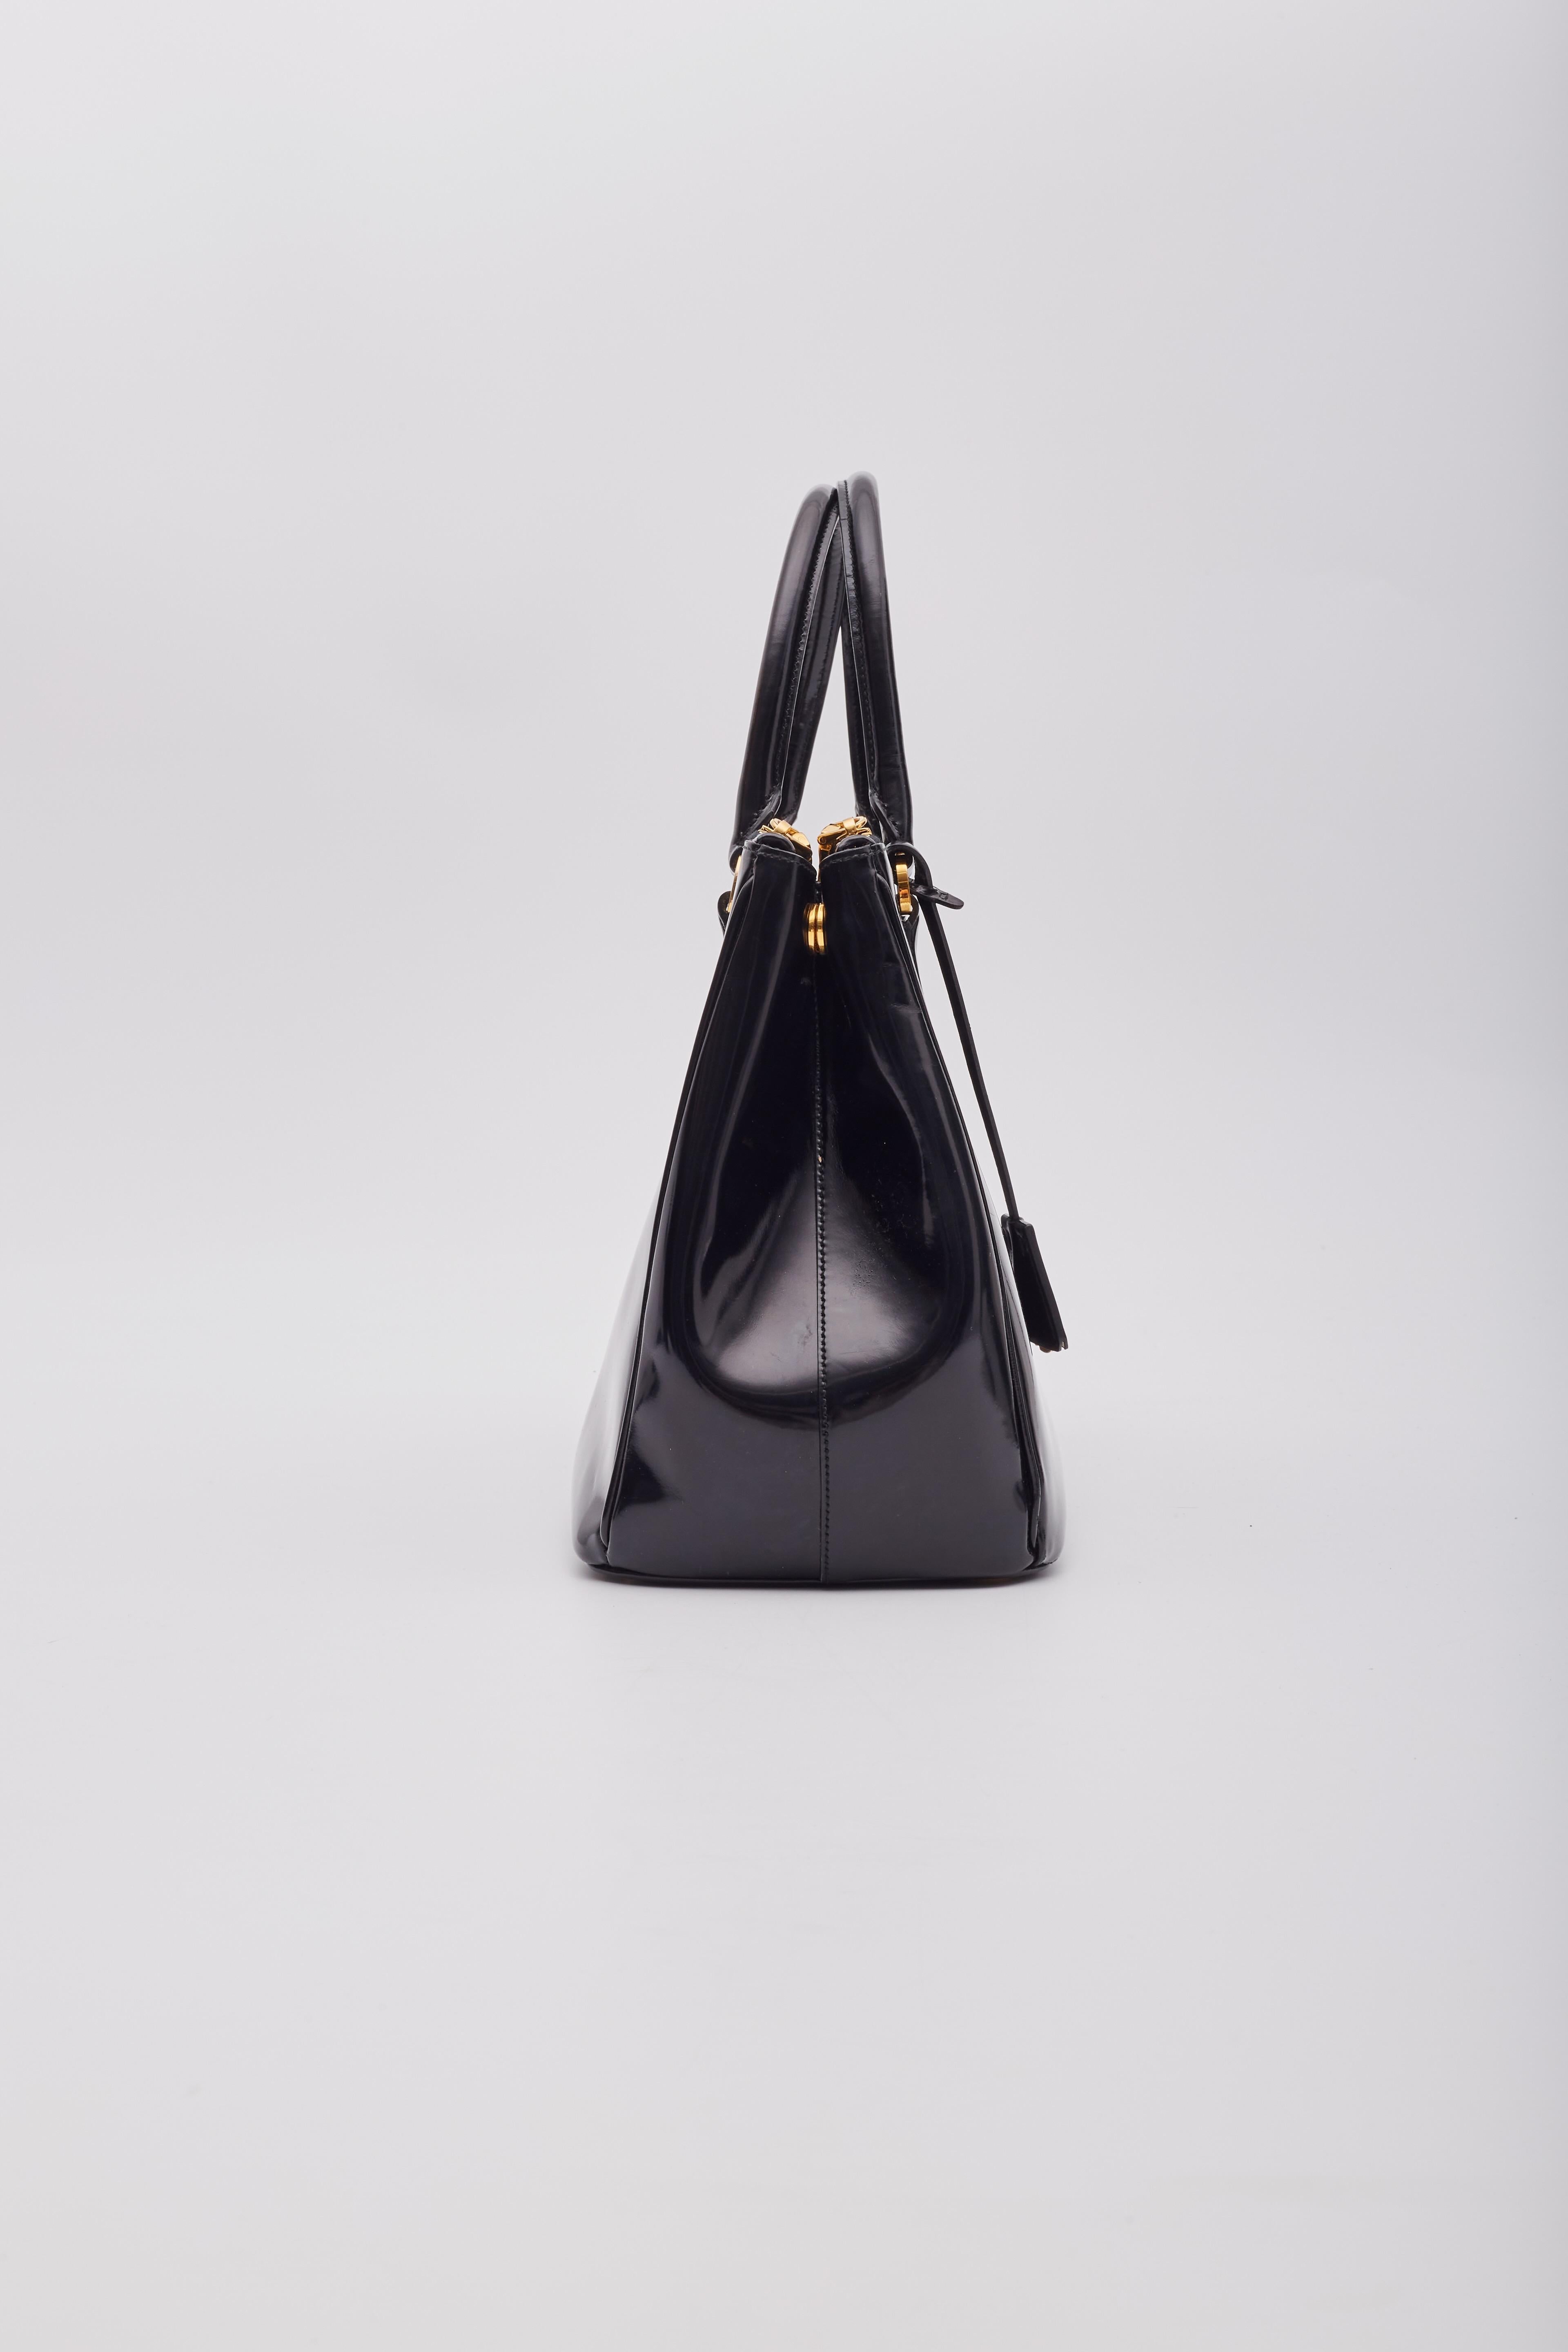 Prada Black Patent Leather Galleria Tote Bag For Sale 1